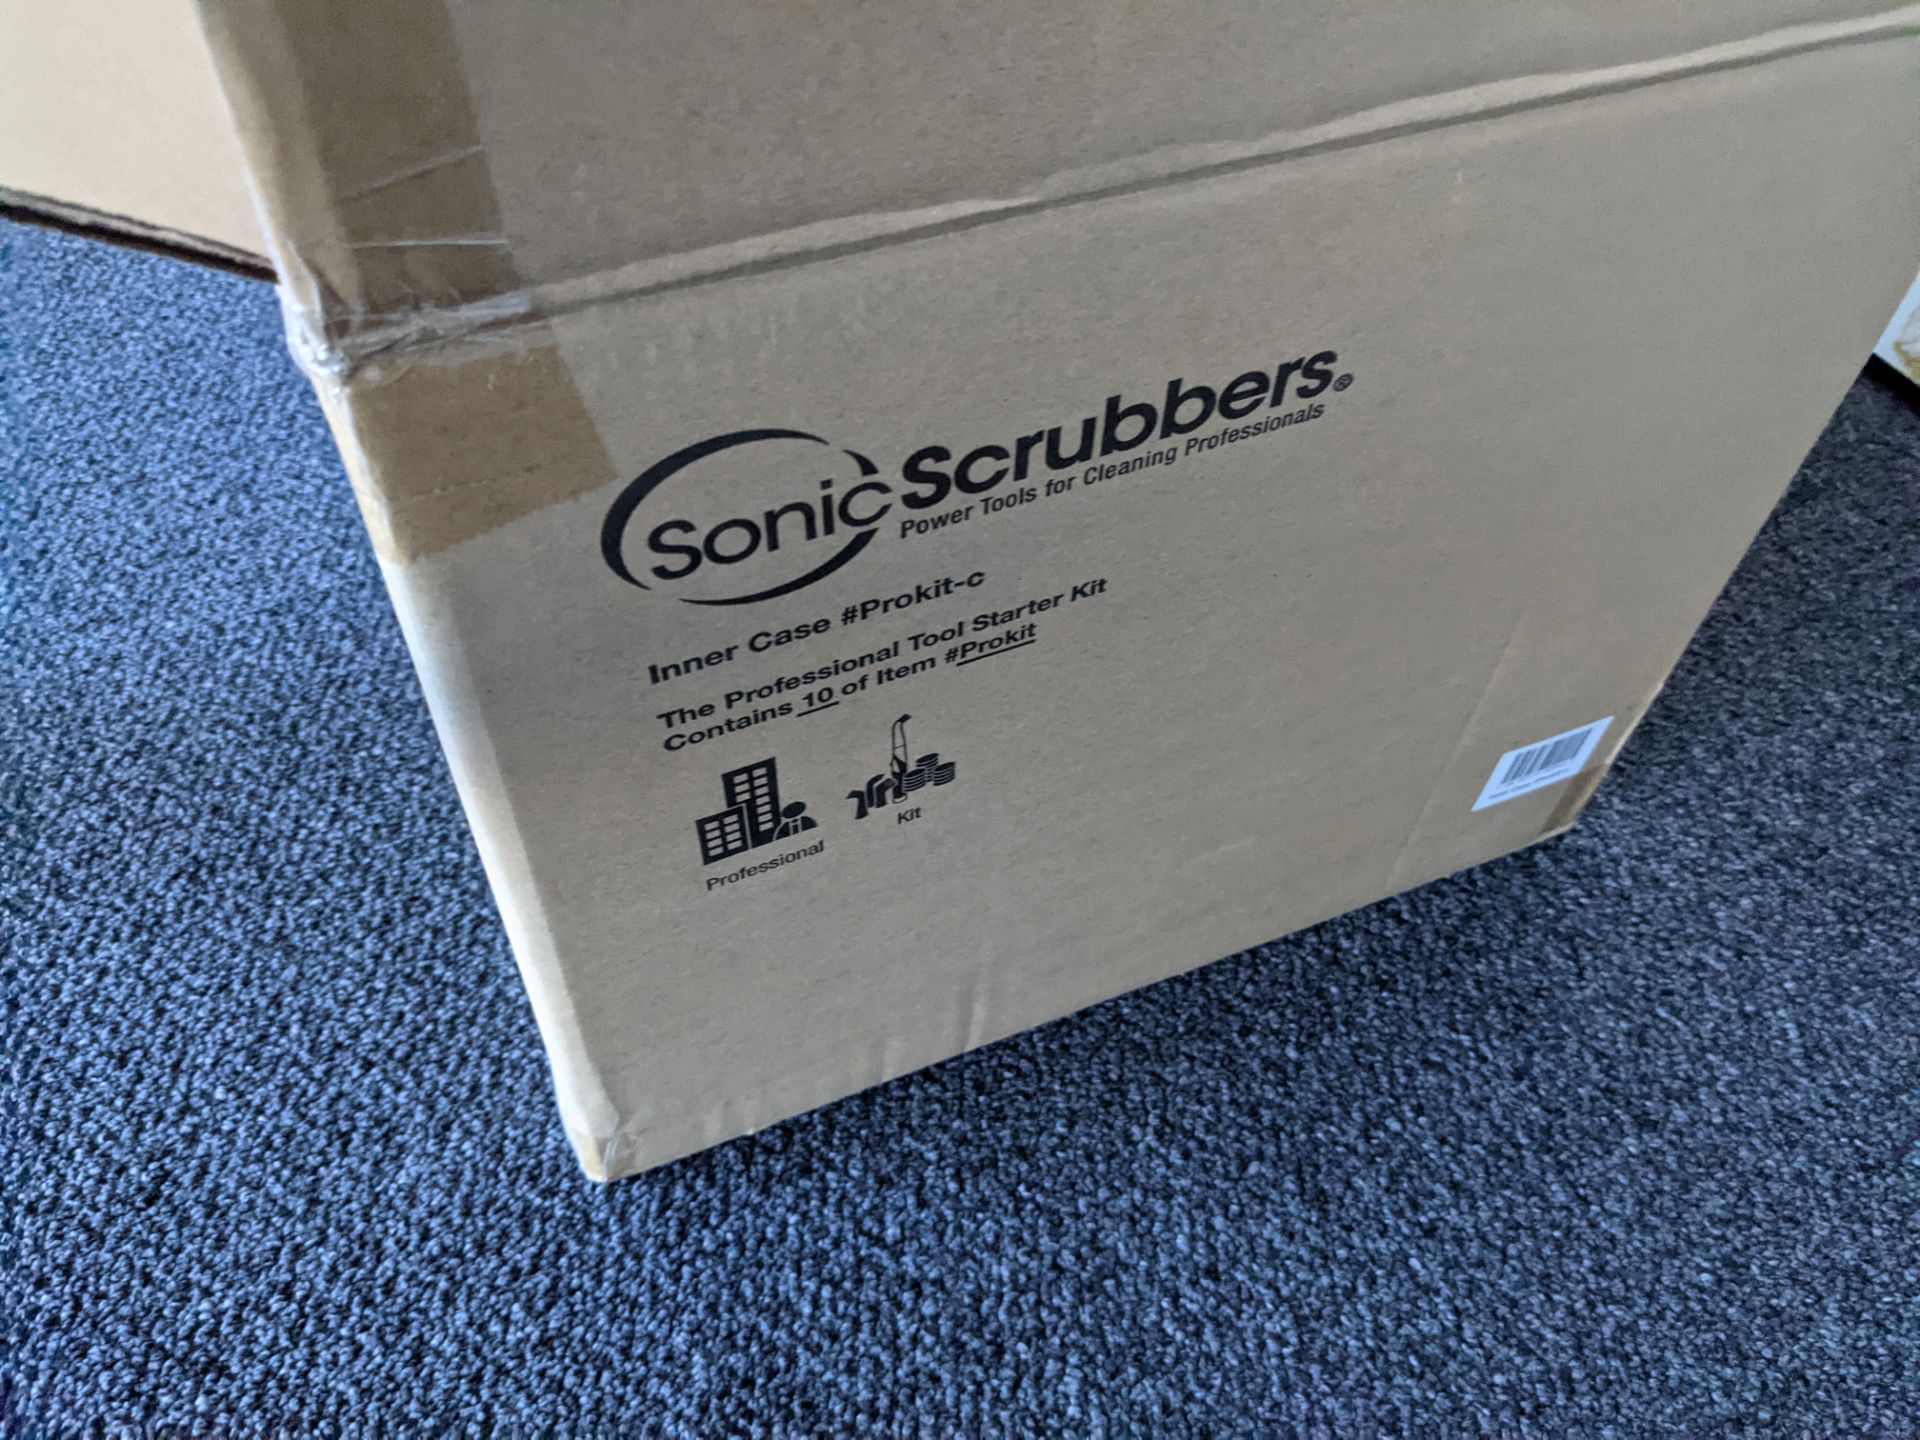 Sonic Scrubbers